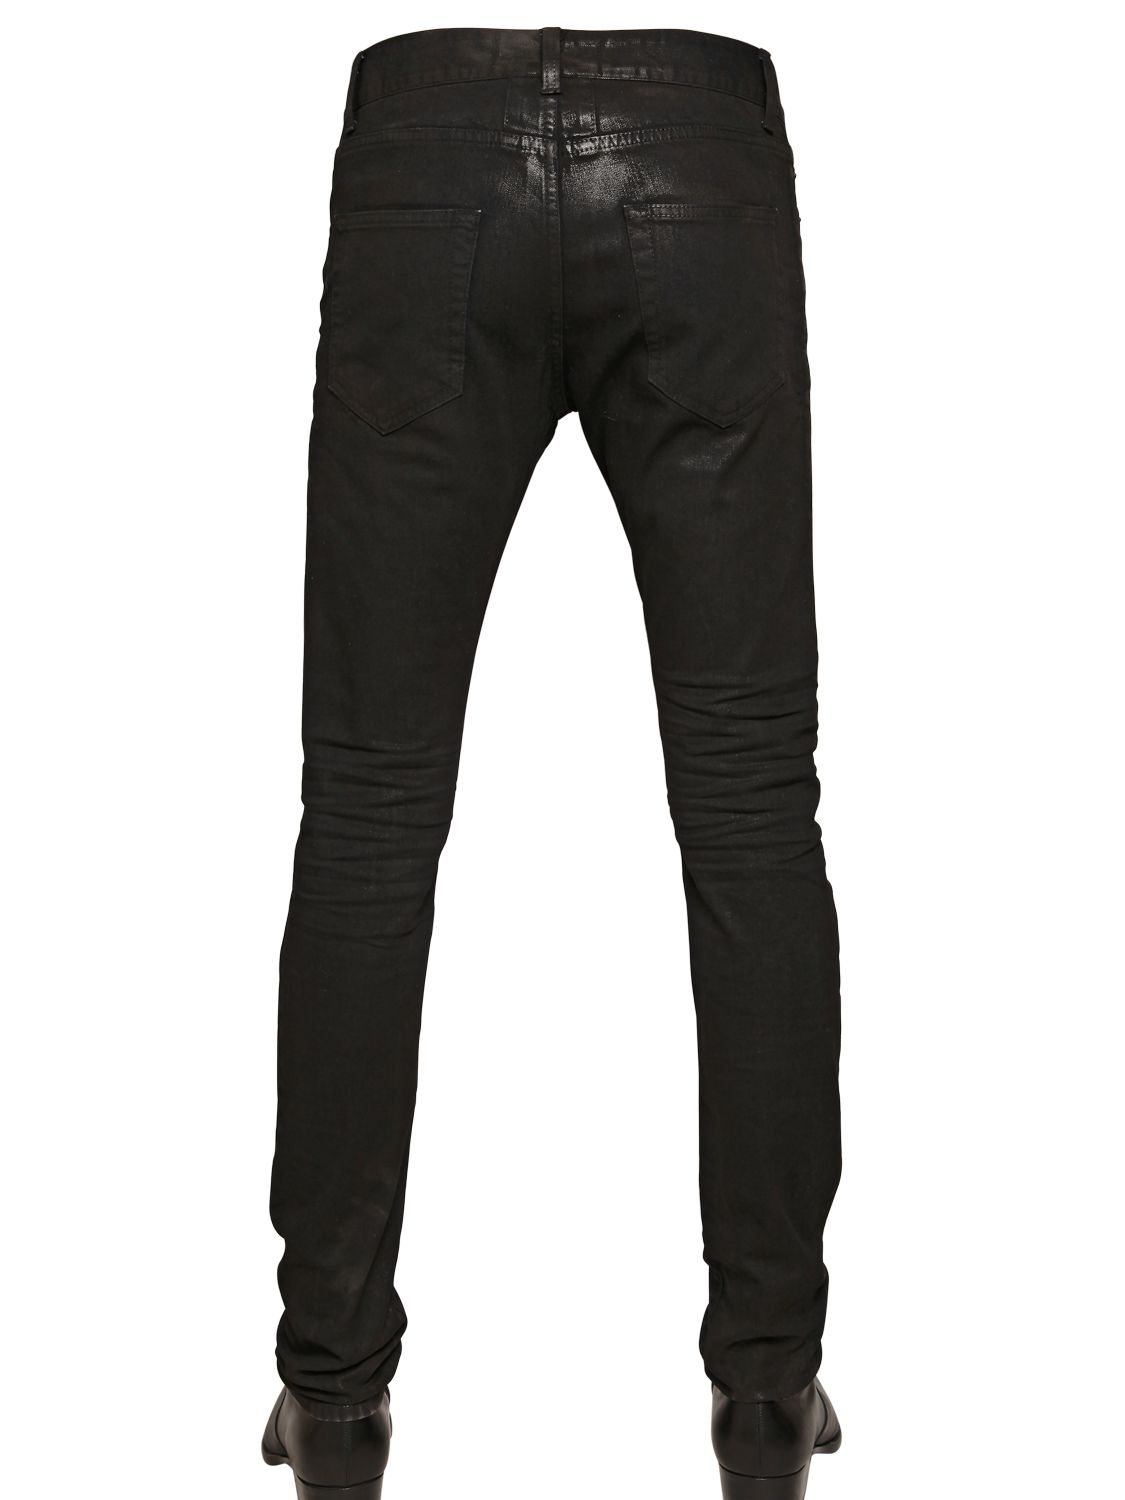 Lyst - Saint Laurent 15.5cm Wax Coated Stretch Denim Jeans in Black for Men